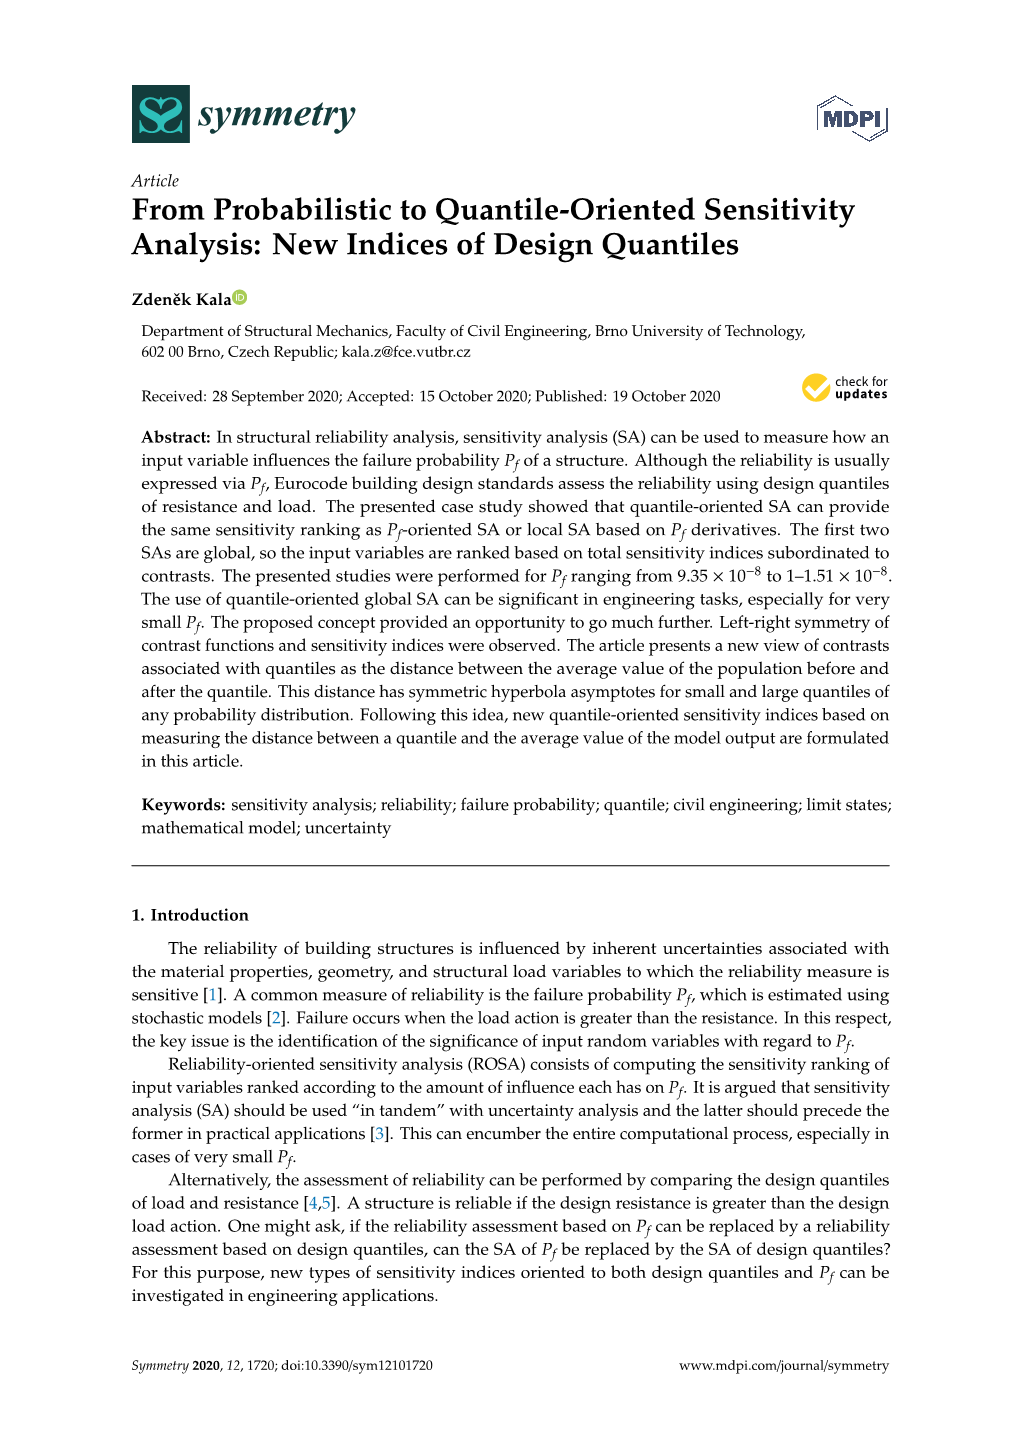 From Probabilistic to Quantile-Oriented Sensitivity Analysis: New Indices of Design Quantiles